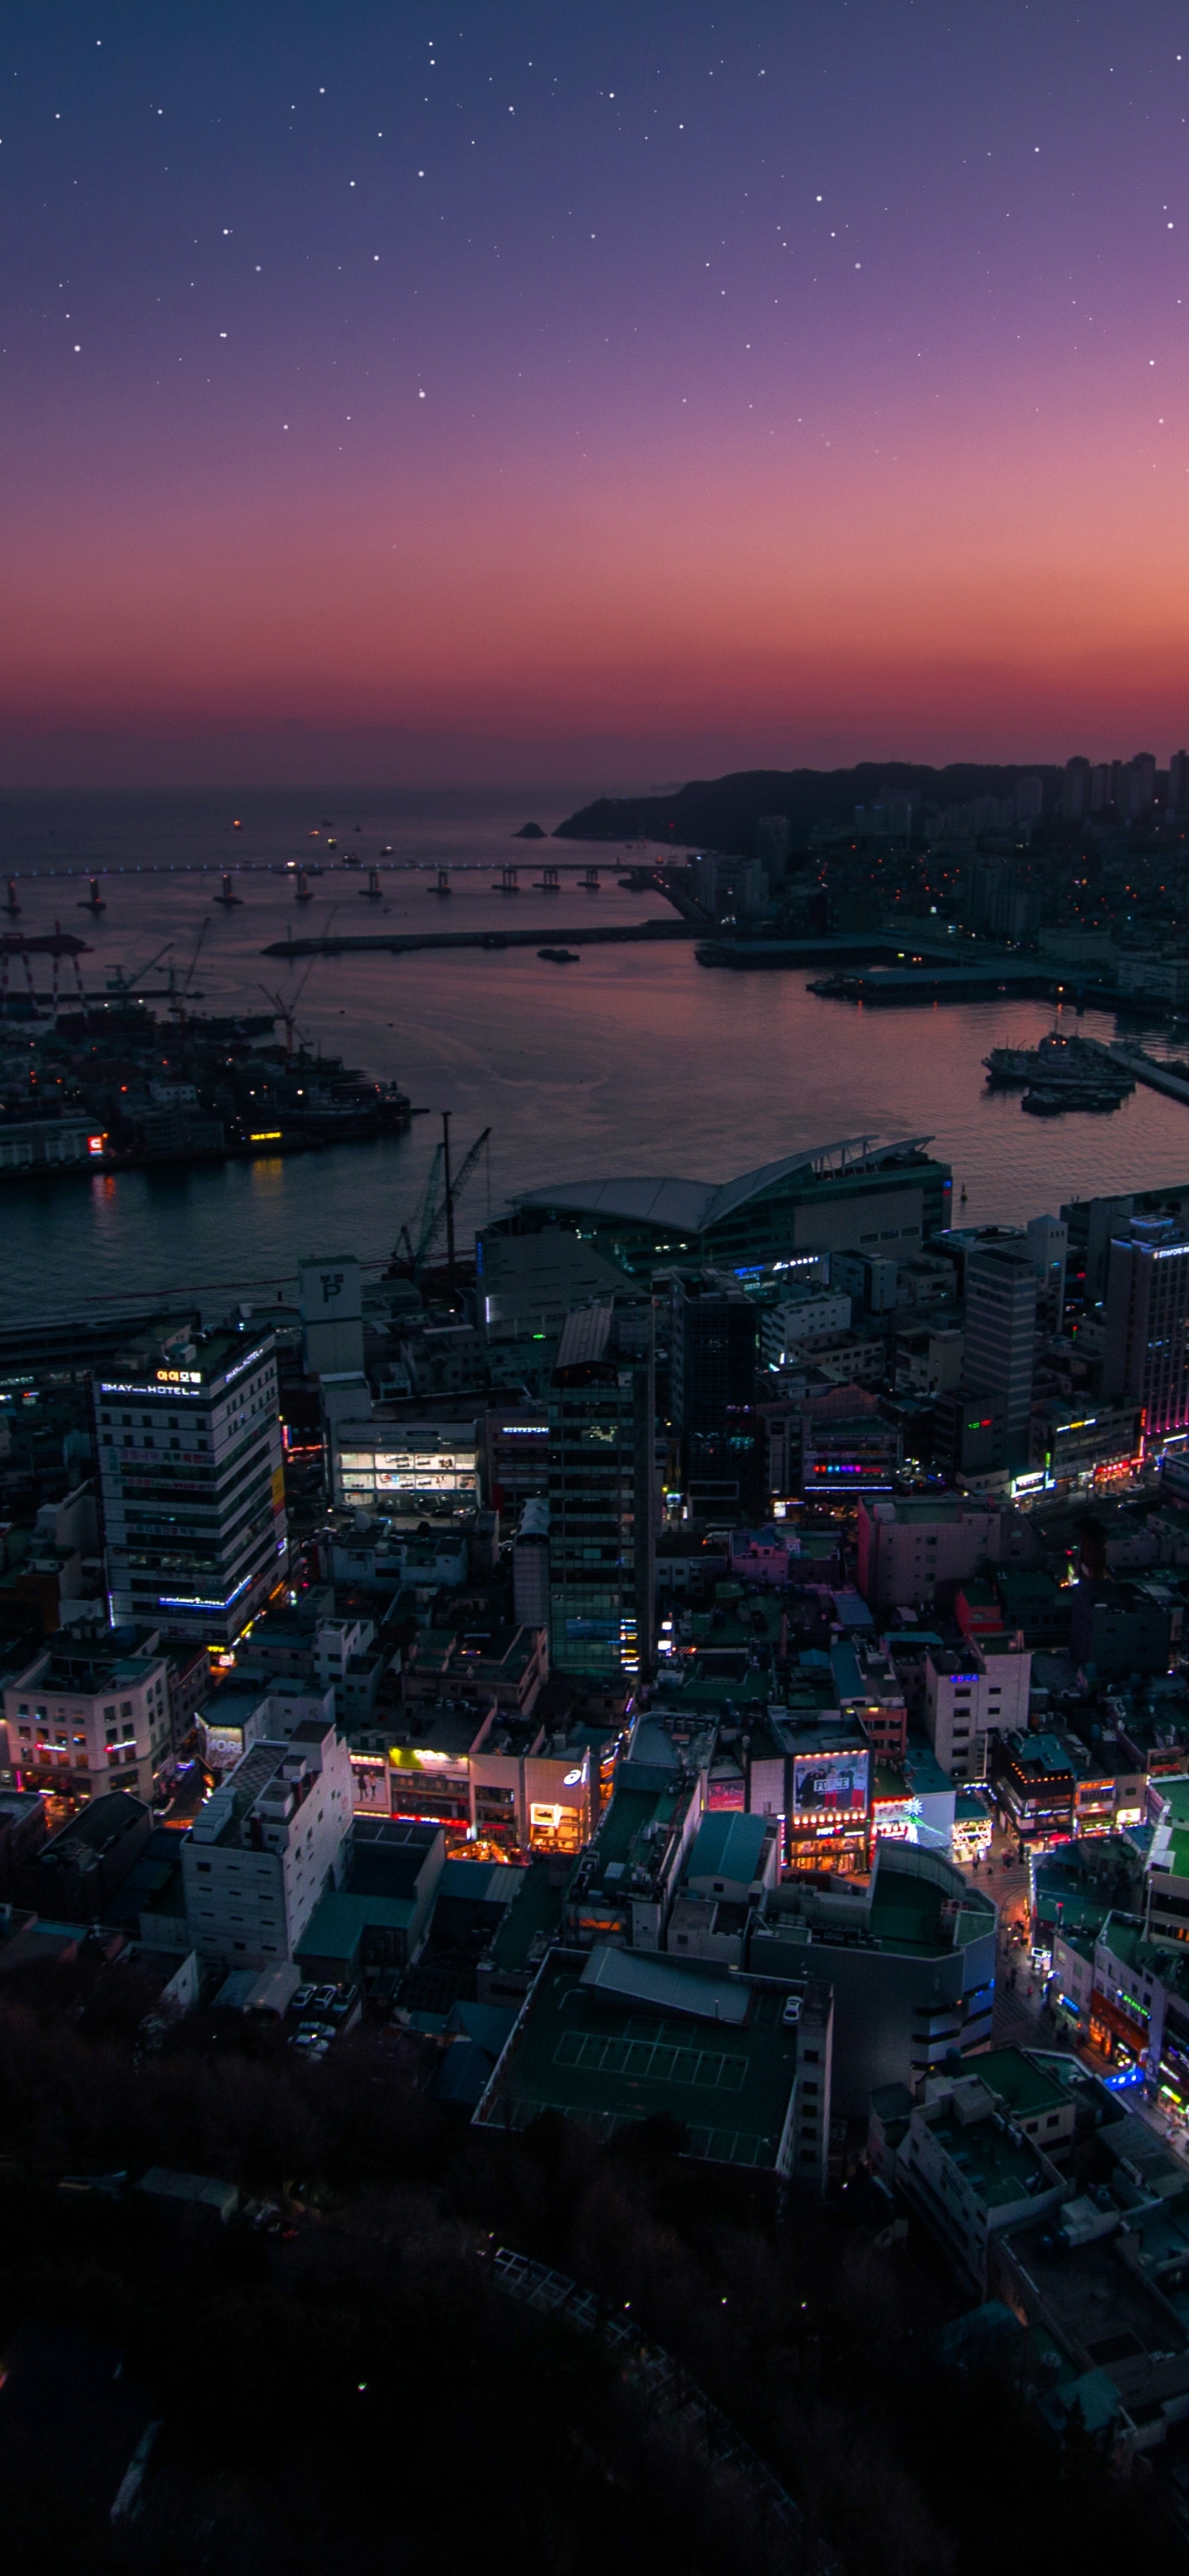 Night falls on Busan, South Korea by Pang Yuhao